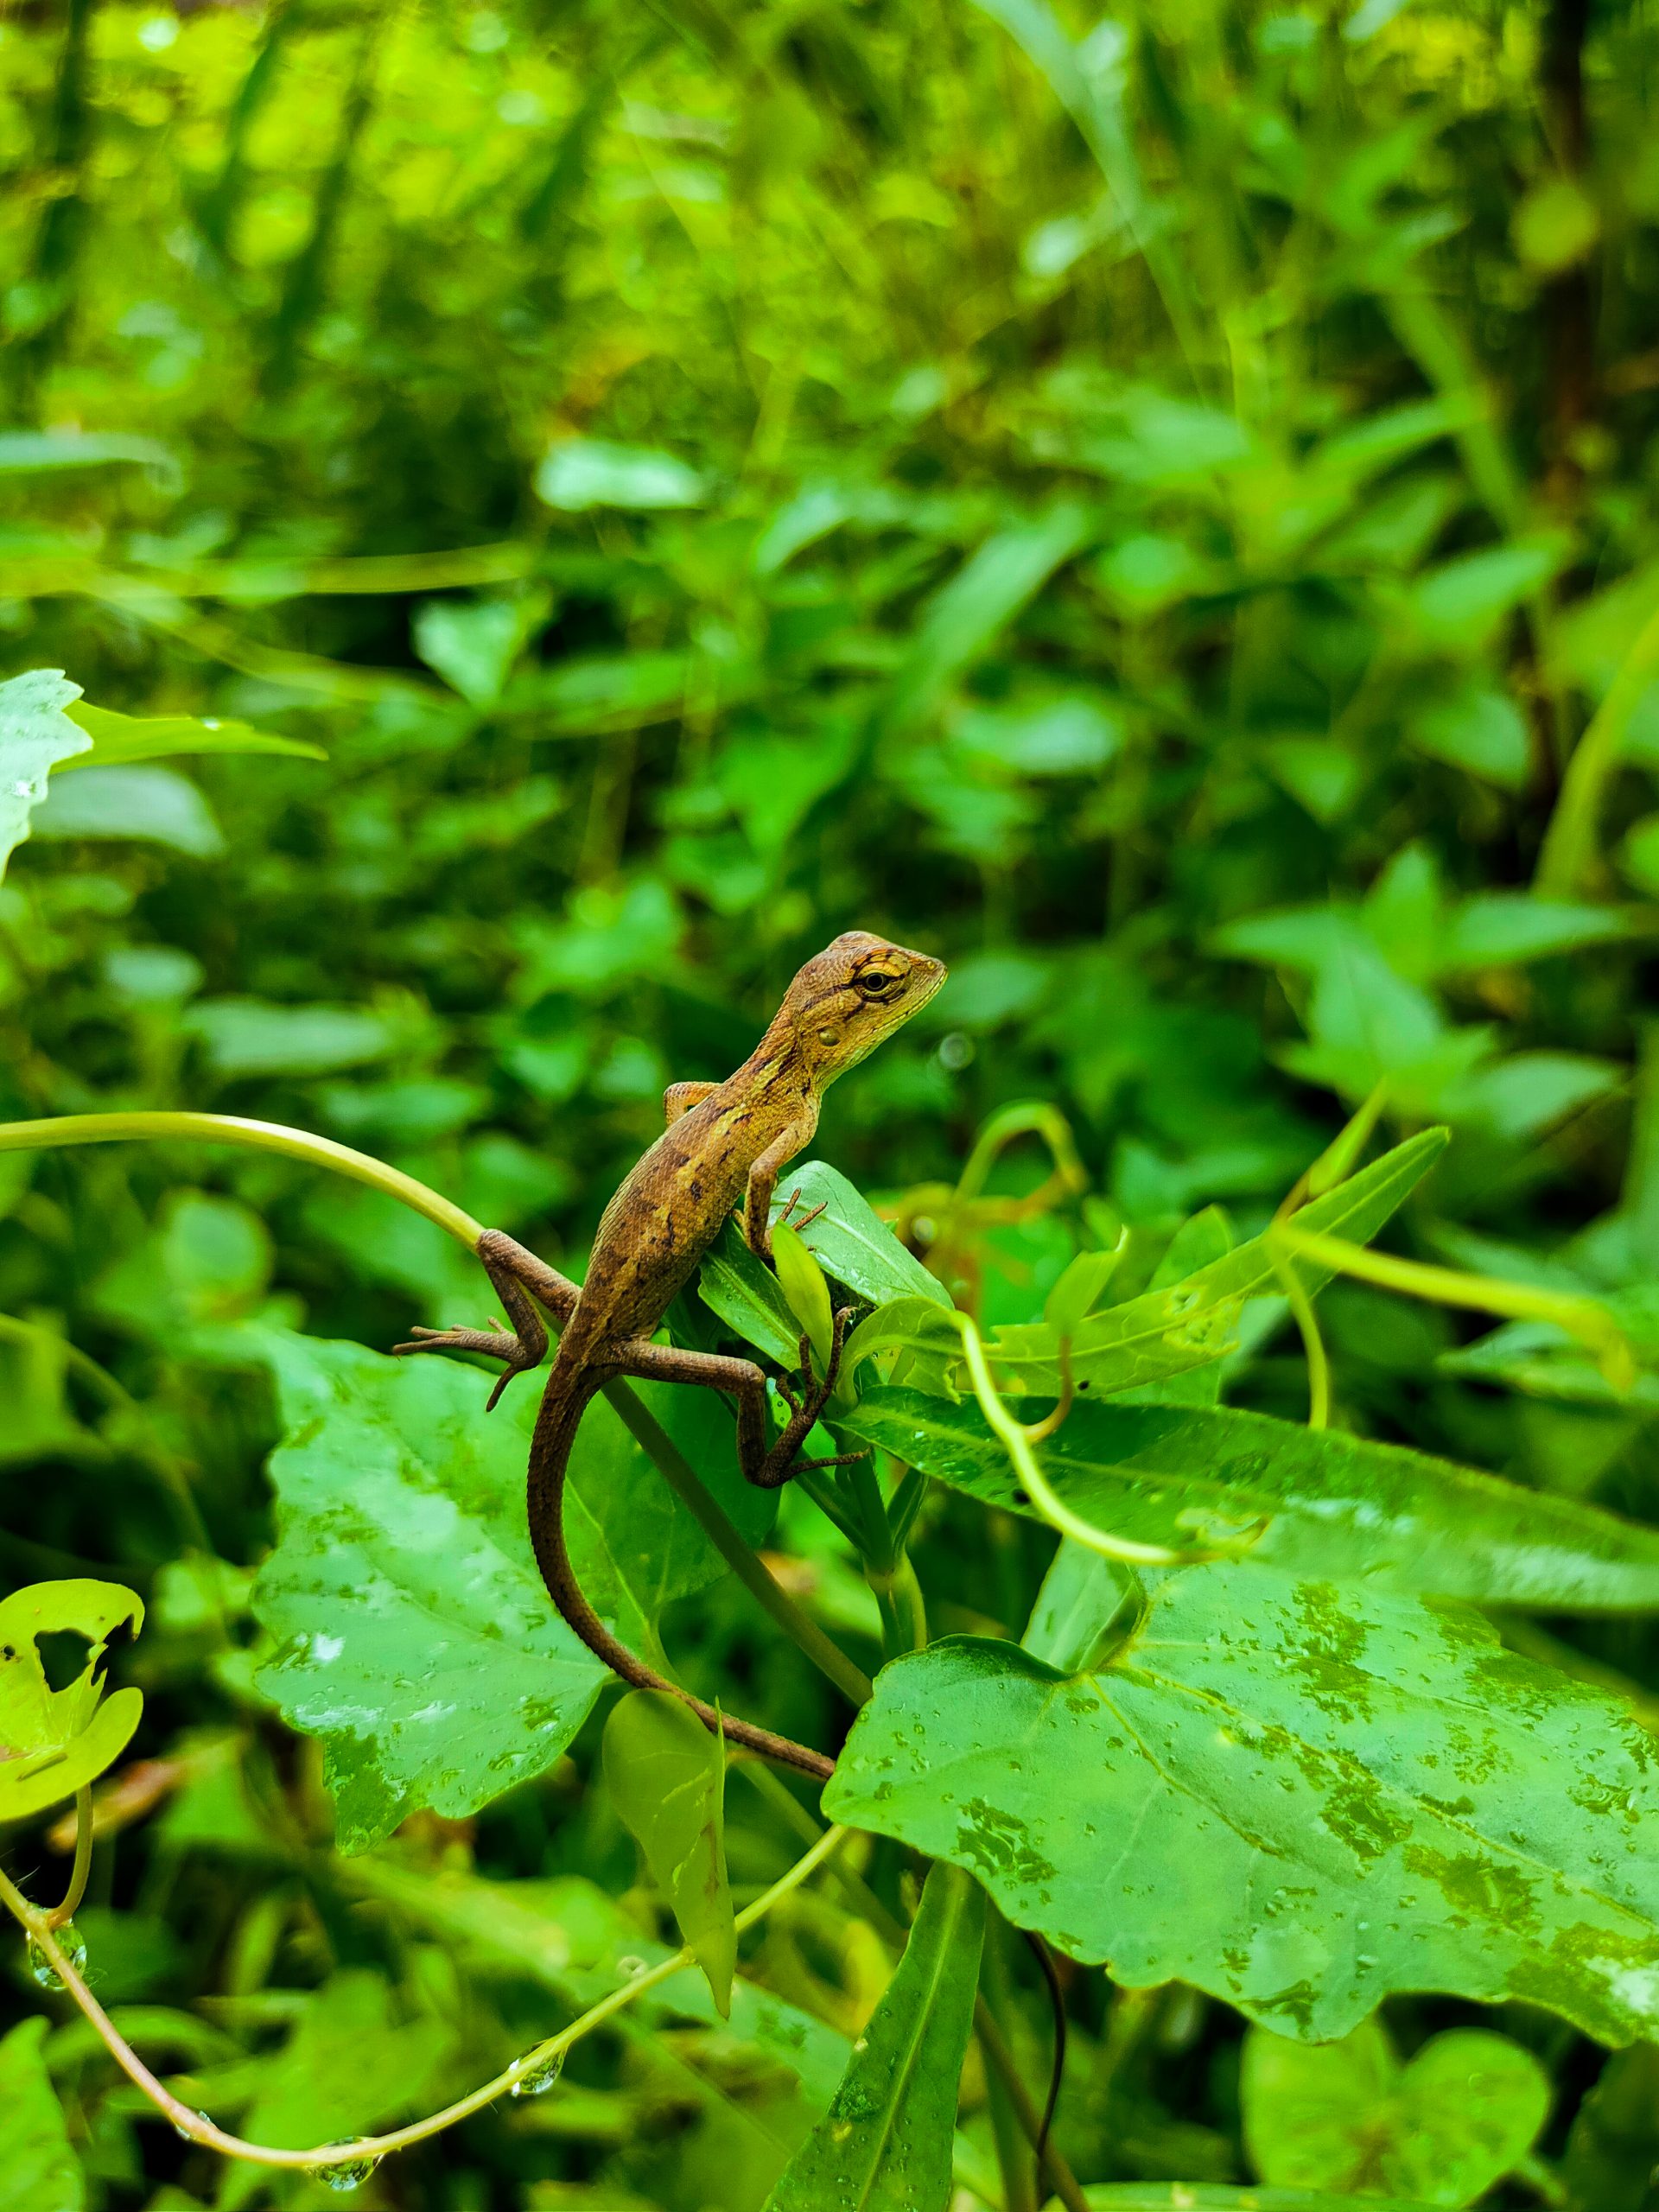 A chameleon on green leaves